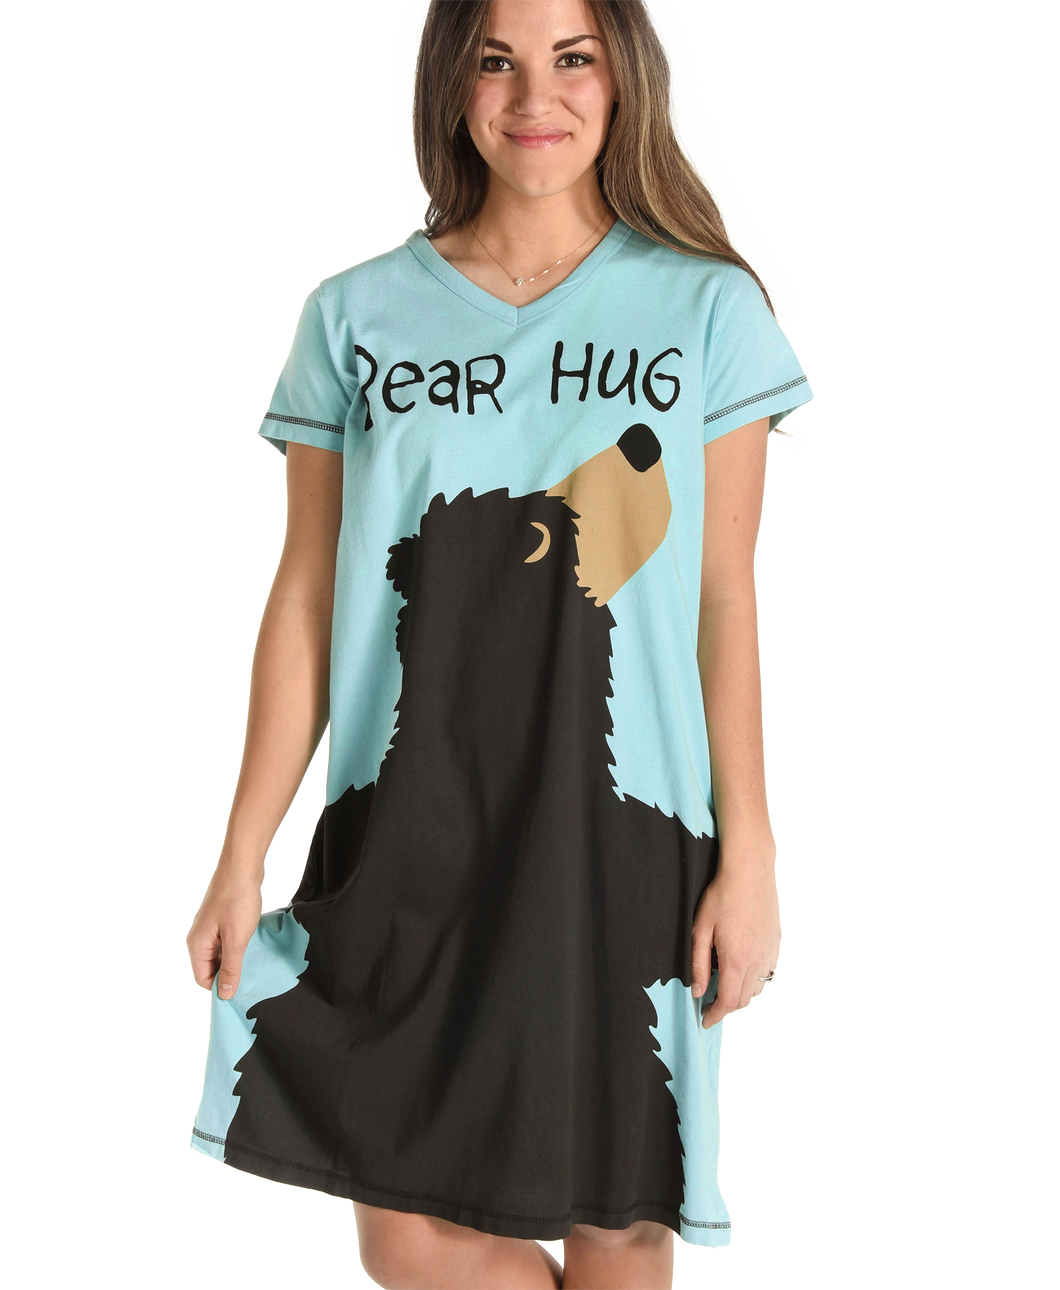 Bear Hug Women's V-neck Nightshirt